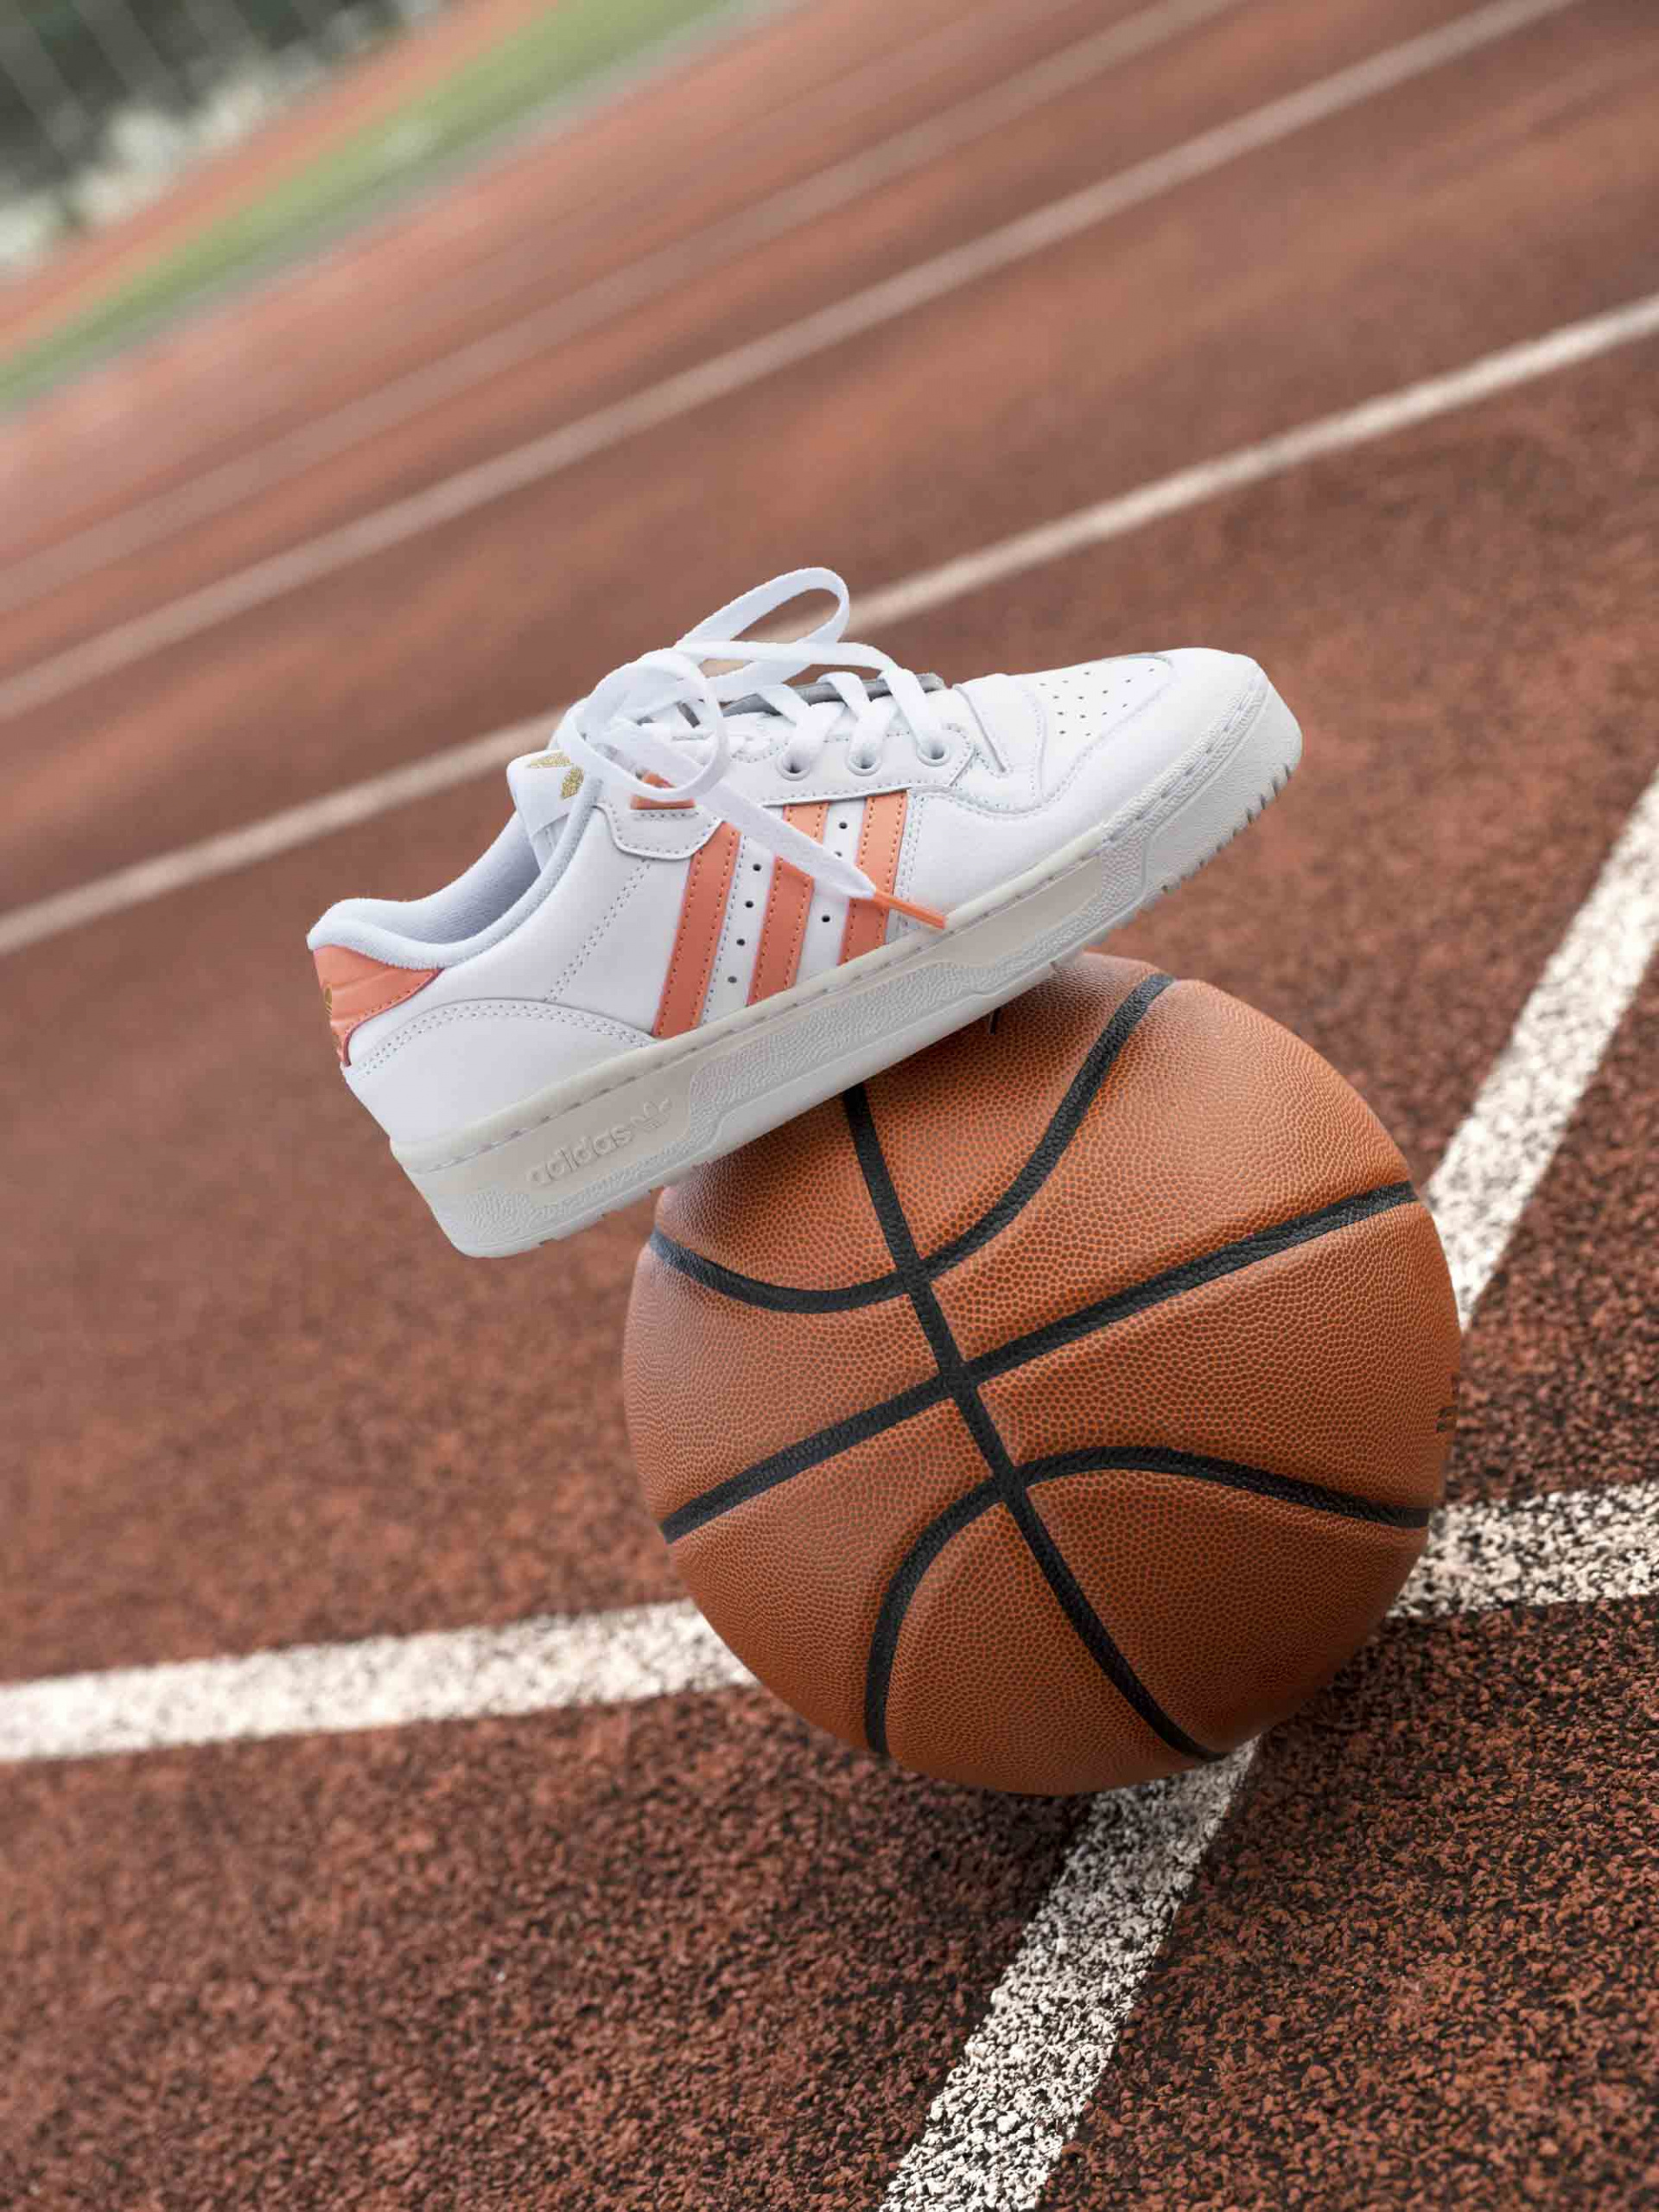 Adidas Rivarly shoes basket ball track athletic - fashion photography lifestyle Asia